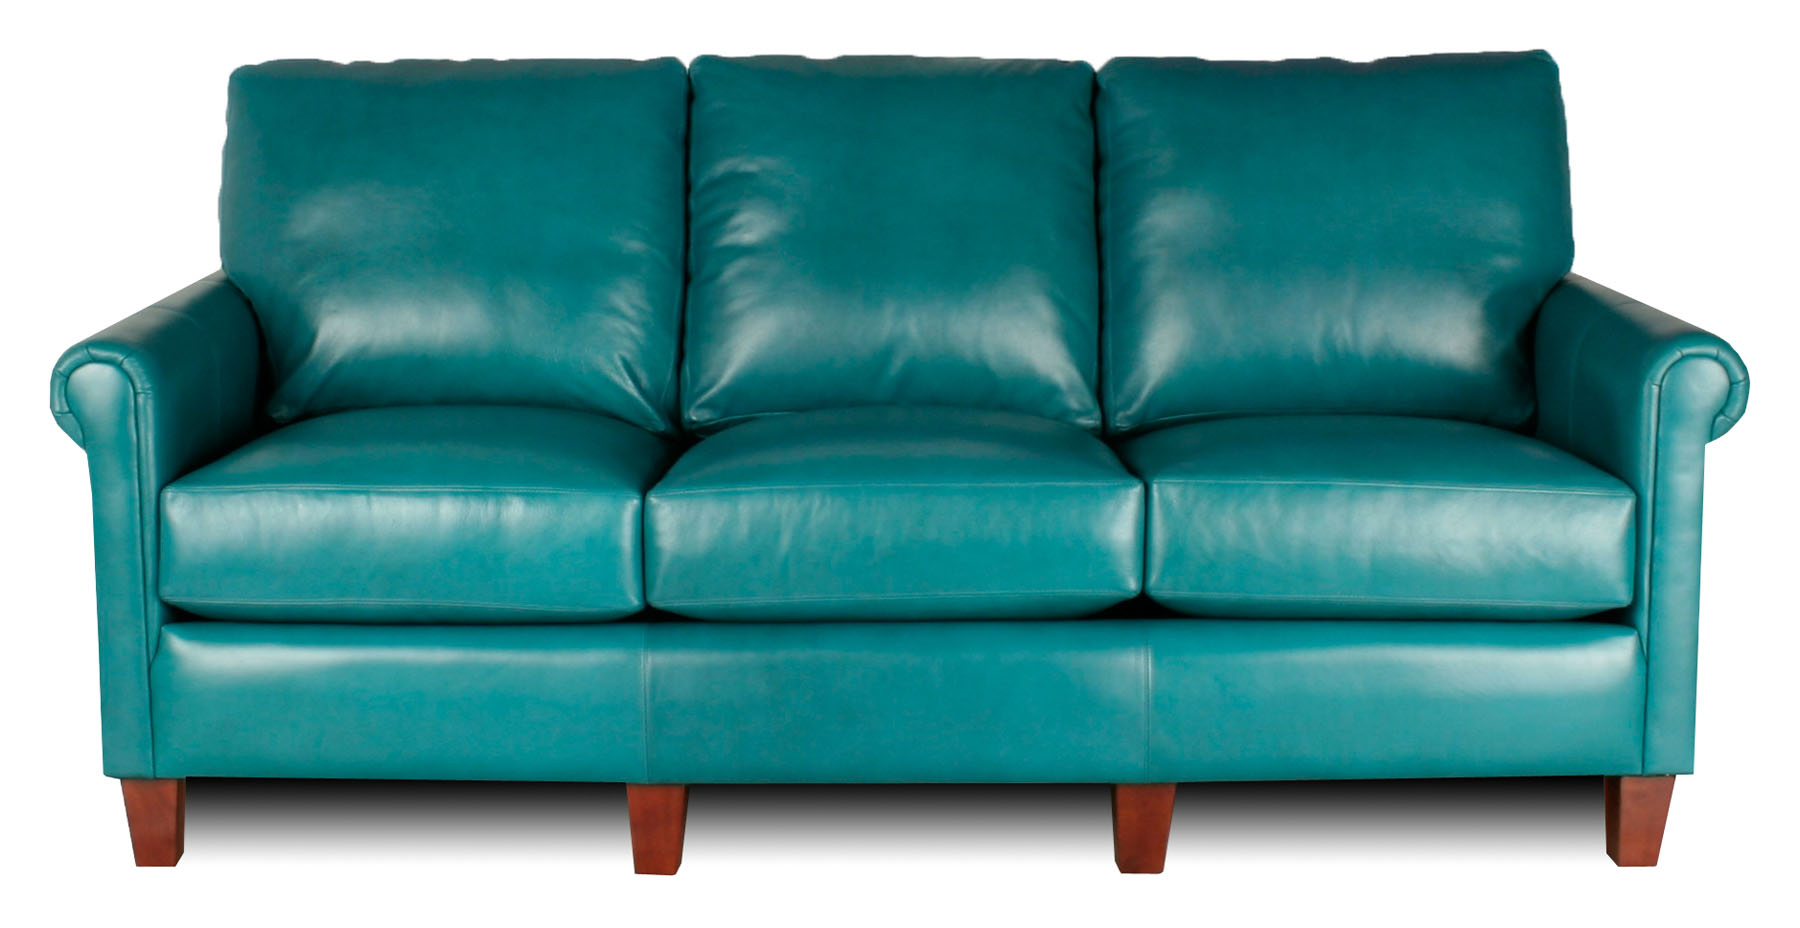 Kenwood Leather Furniture